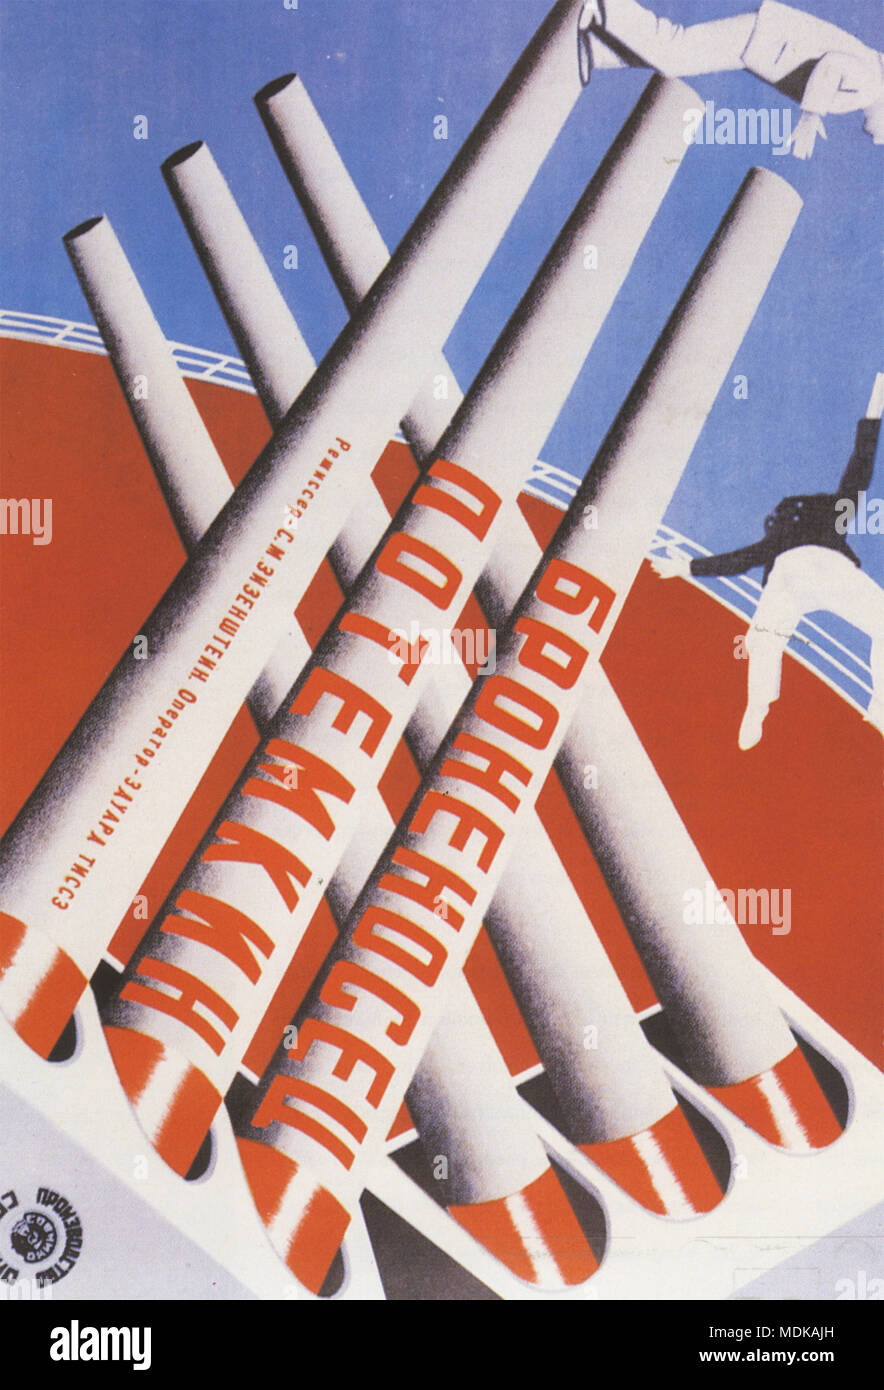 BATTLESHIP POTEMKIN poster for the 1925 Soviet film directed by Sergei Eisenstein, designed by Georgi and Vladimir Stenberg Stock Photo